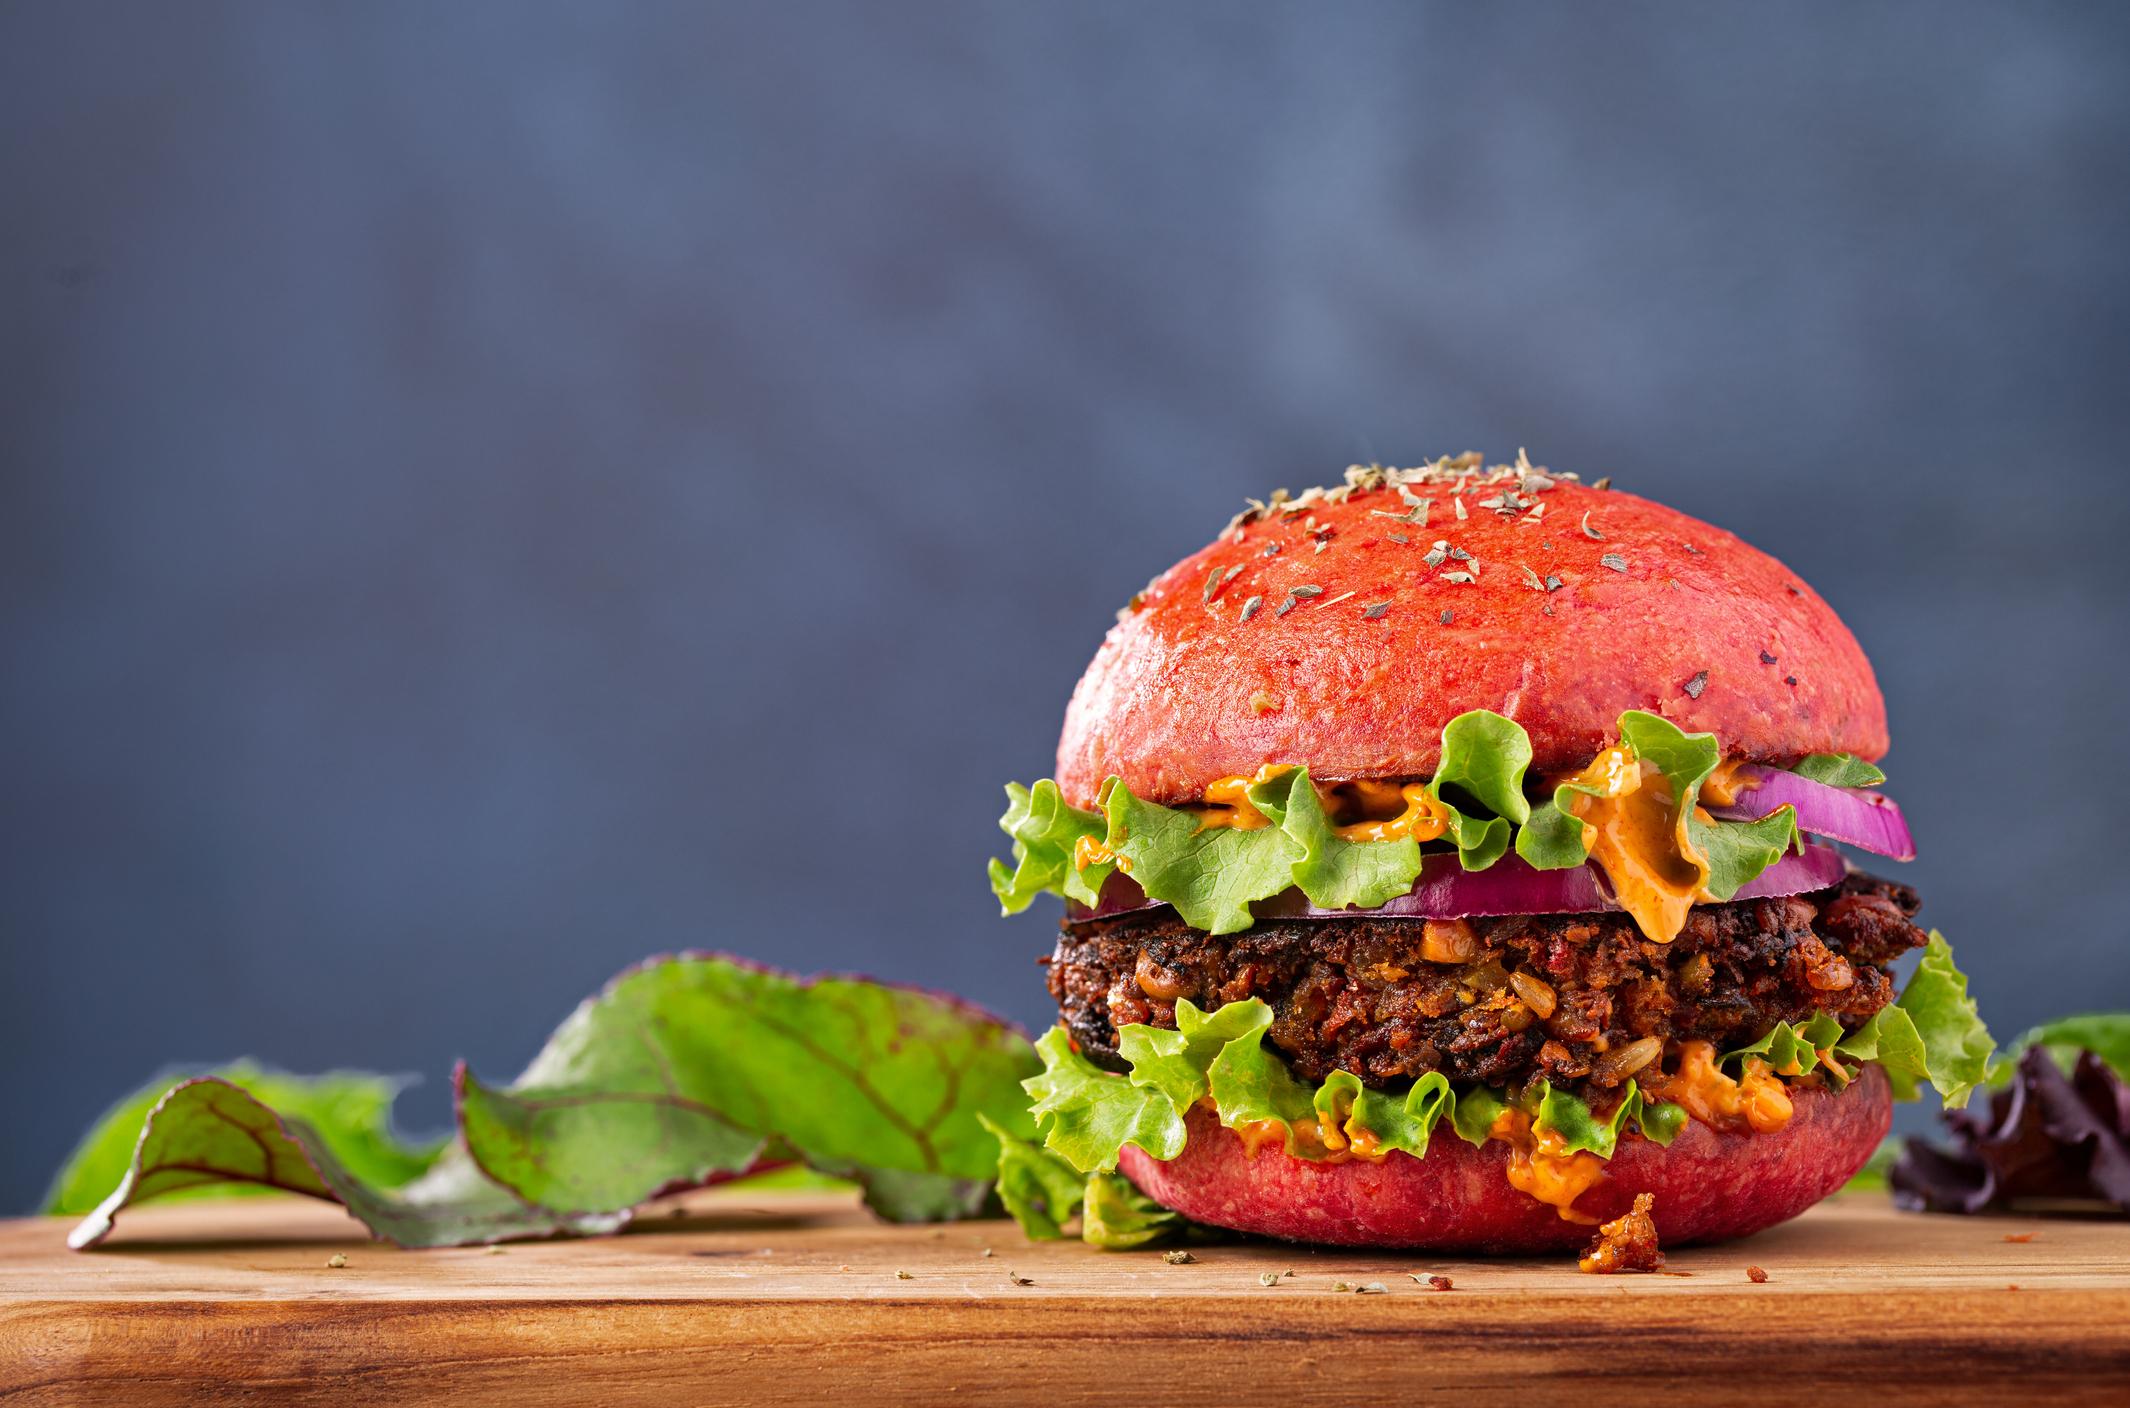  Close-up of a vegan burger on table 